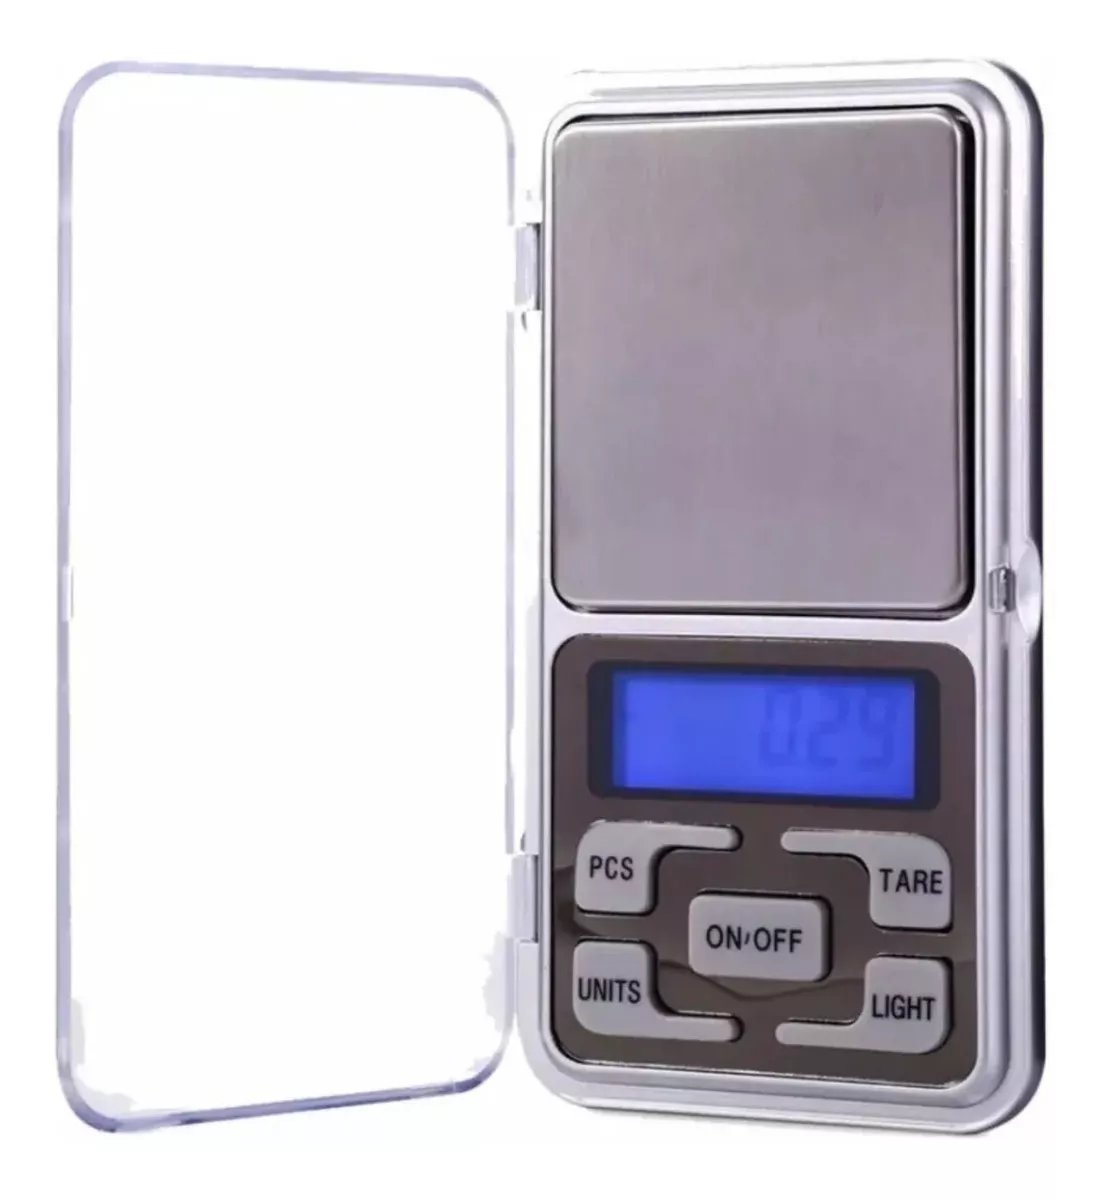 Mini Balanza Portatil Pocket Scale Digital 0.1 A 200gramos